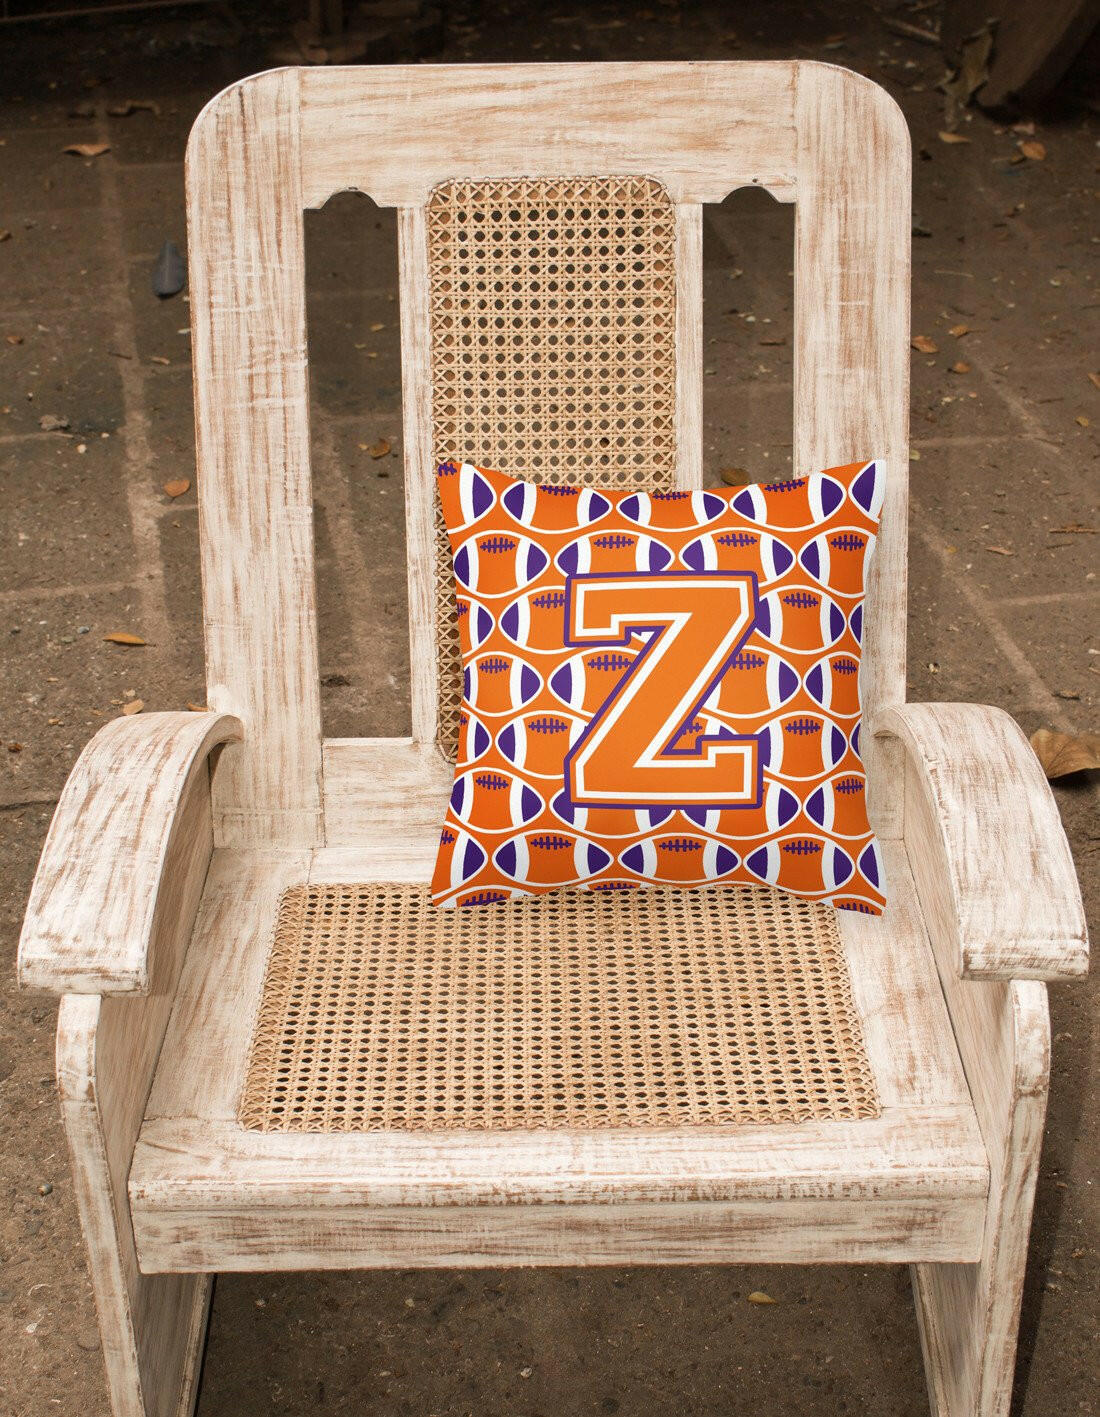 Letter Z Football Orange, White and Regalia Fabric Decorative Pillow CJ1072-ZPW1414 by Caroline's Treasures